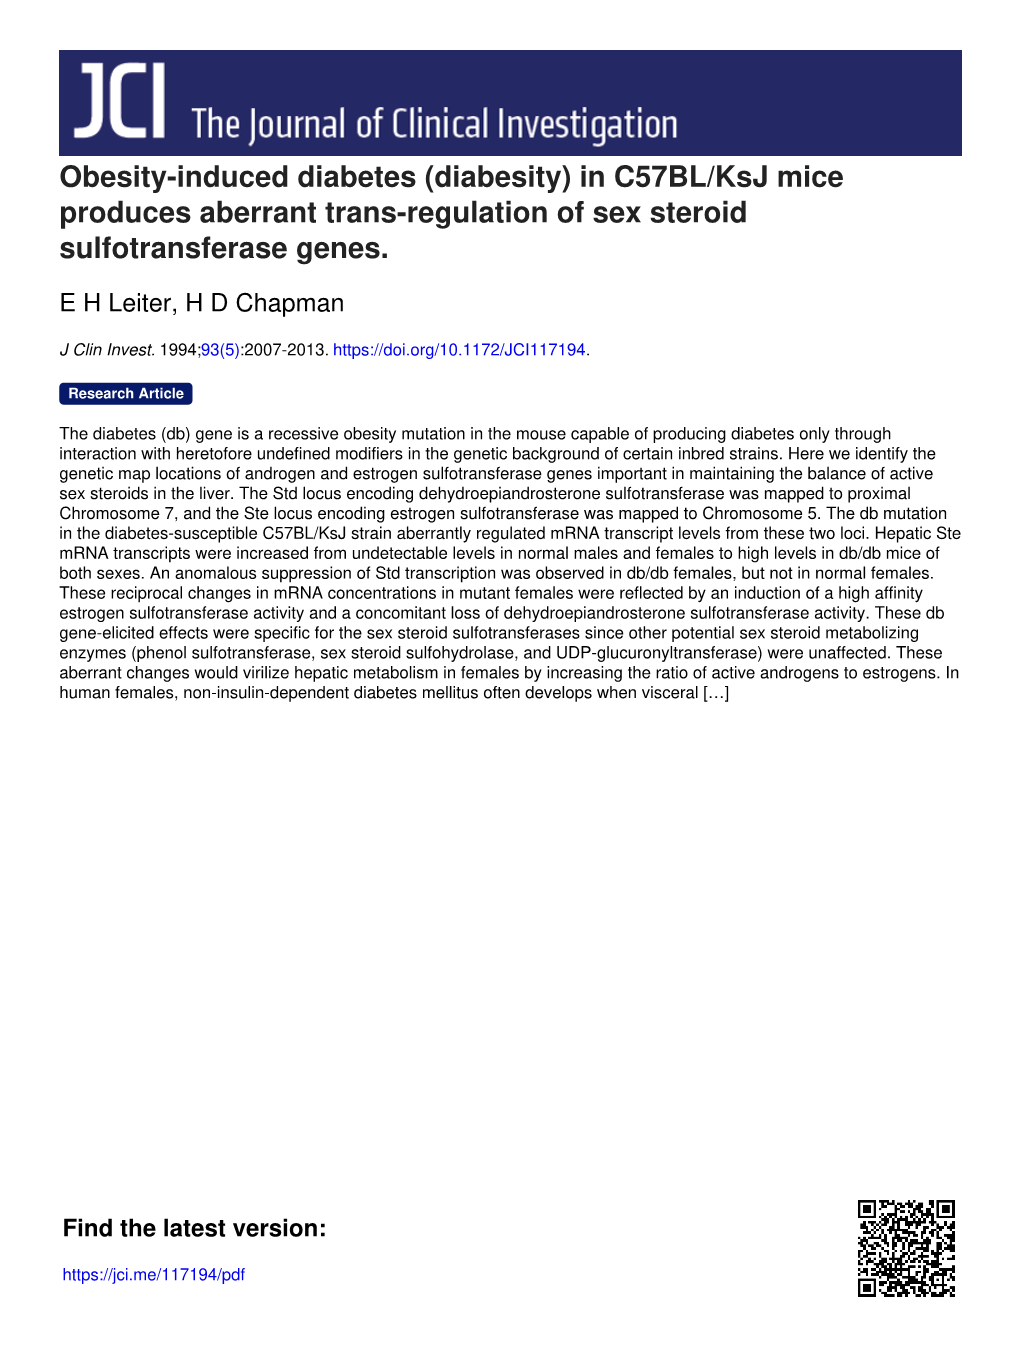 Obesity-Induced Diabetes (Diabesity) in C57BL/Ksj Mice Produces Aberrant Trans-Regulation of Sex Steroid Sulfotransferase Genes